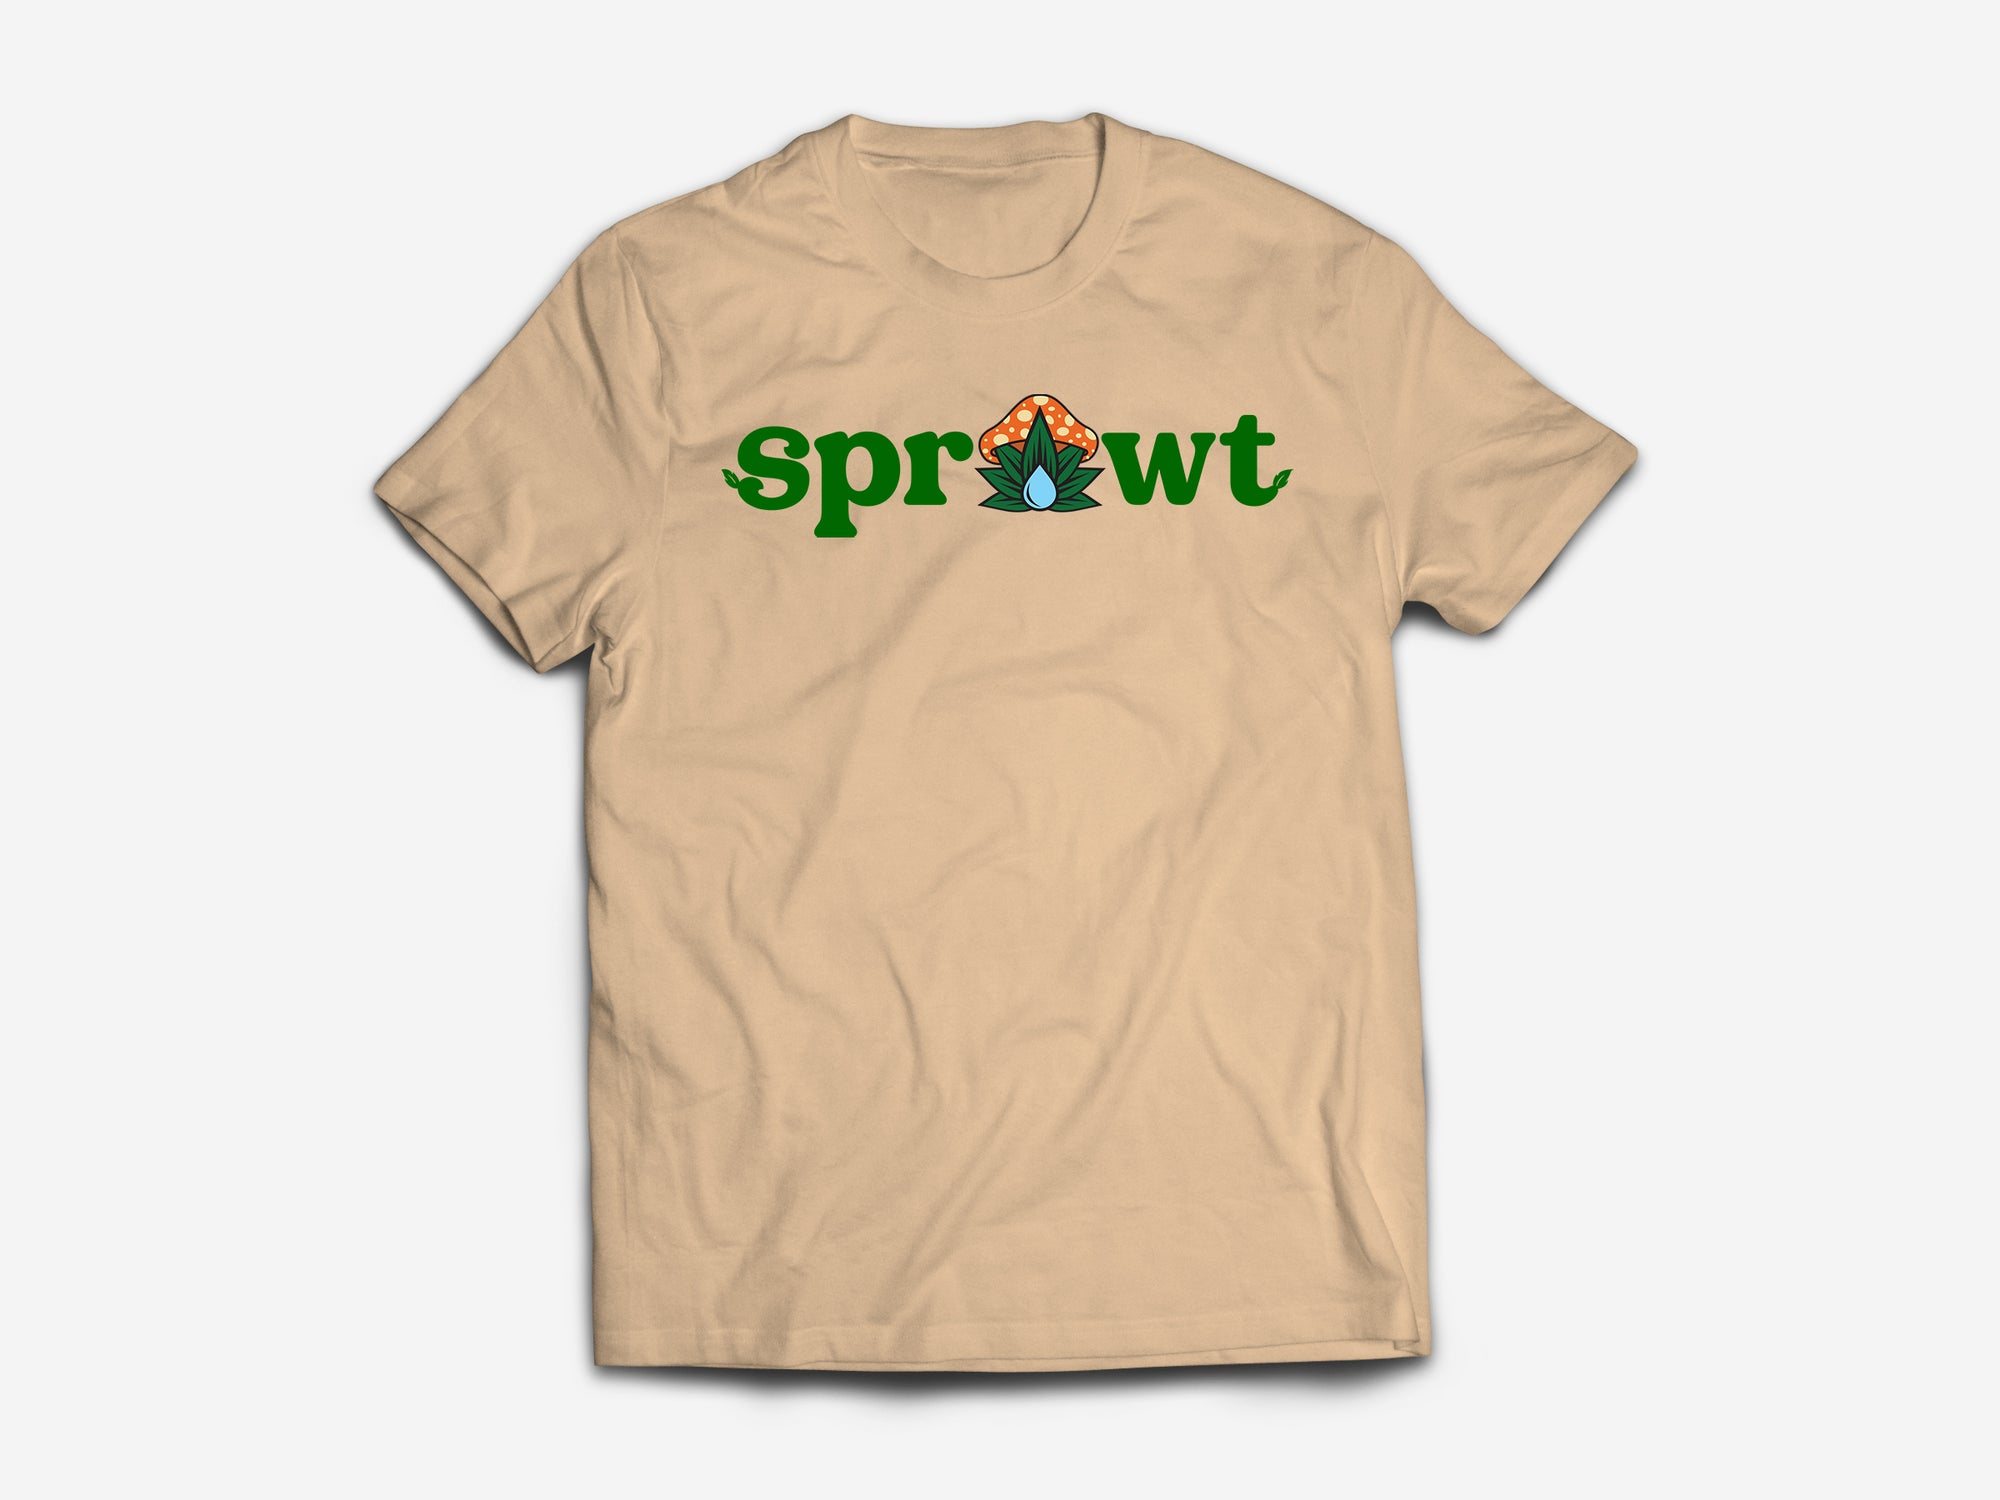 Sprowt Shirt - 100% Cotton